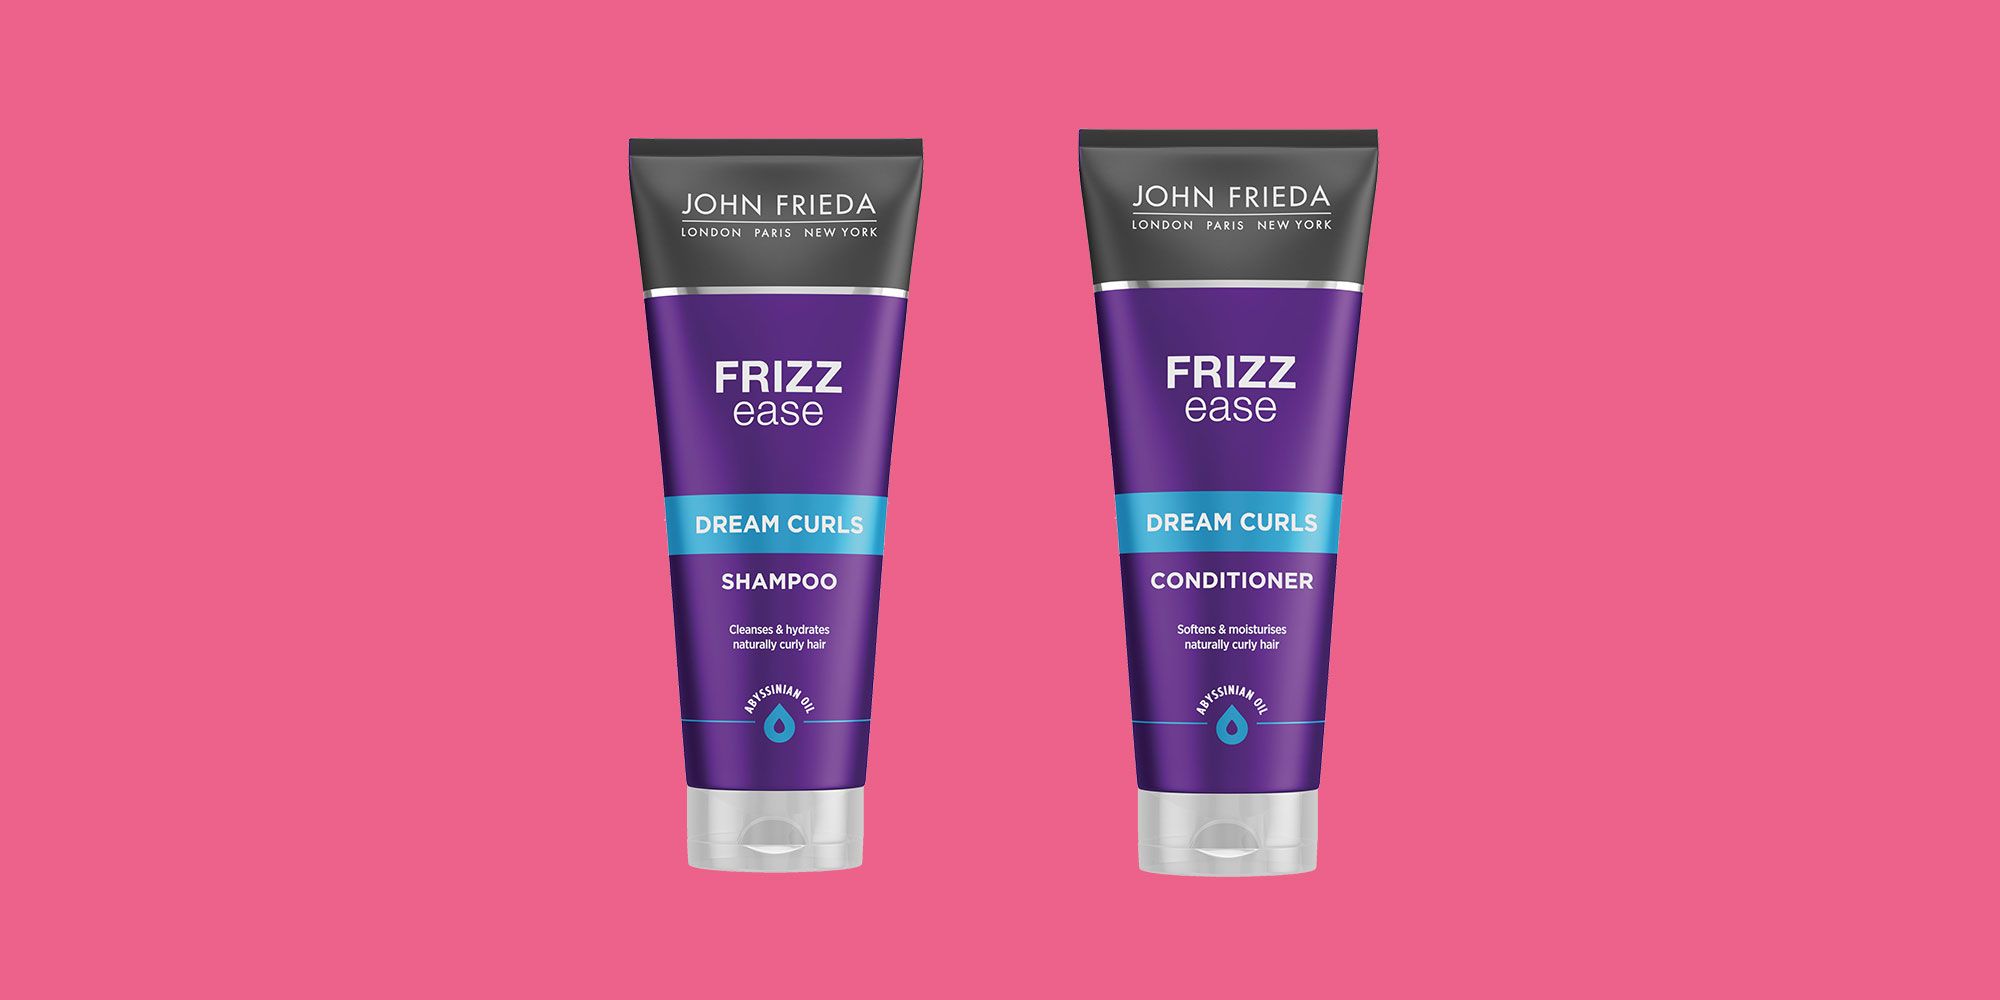 John Frieda Frizz Ease Dream Curls Shampoo and Conditioner review